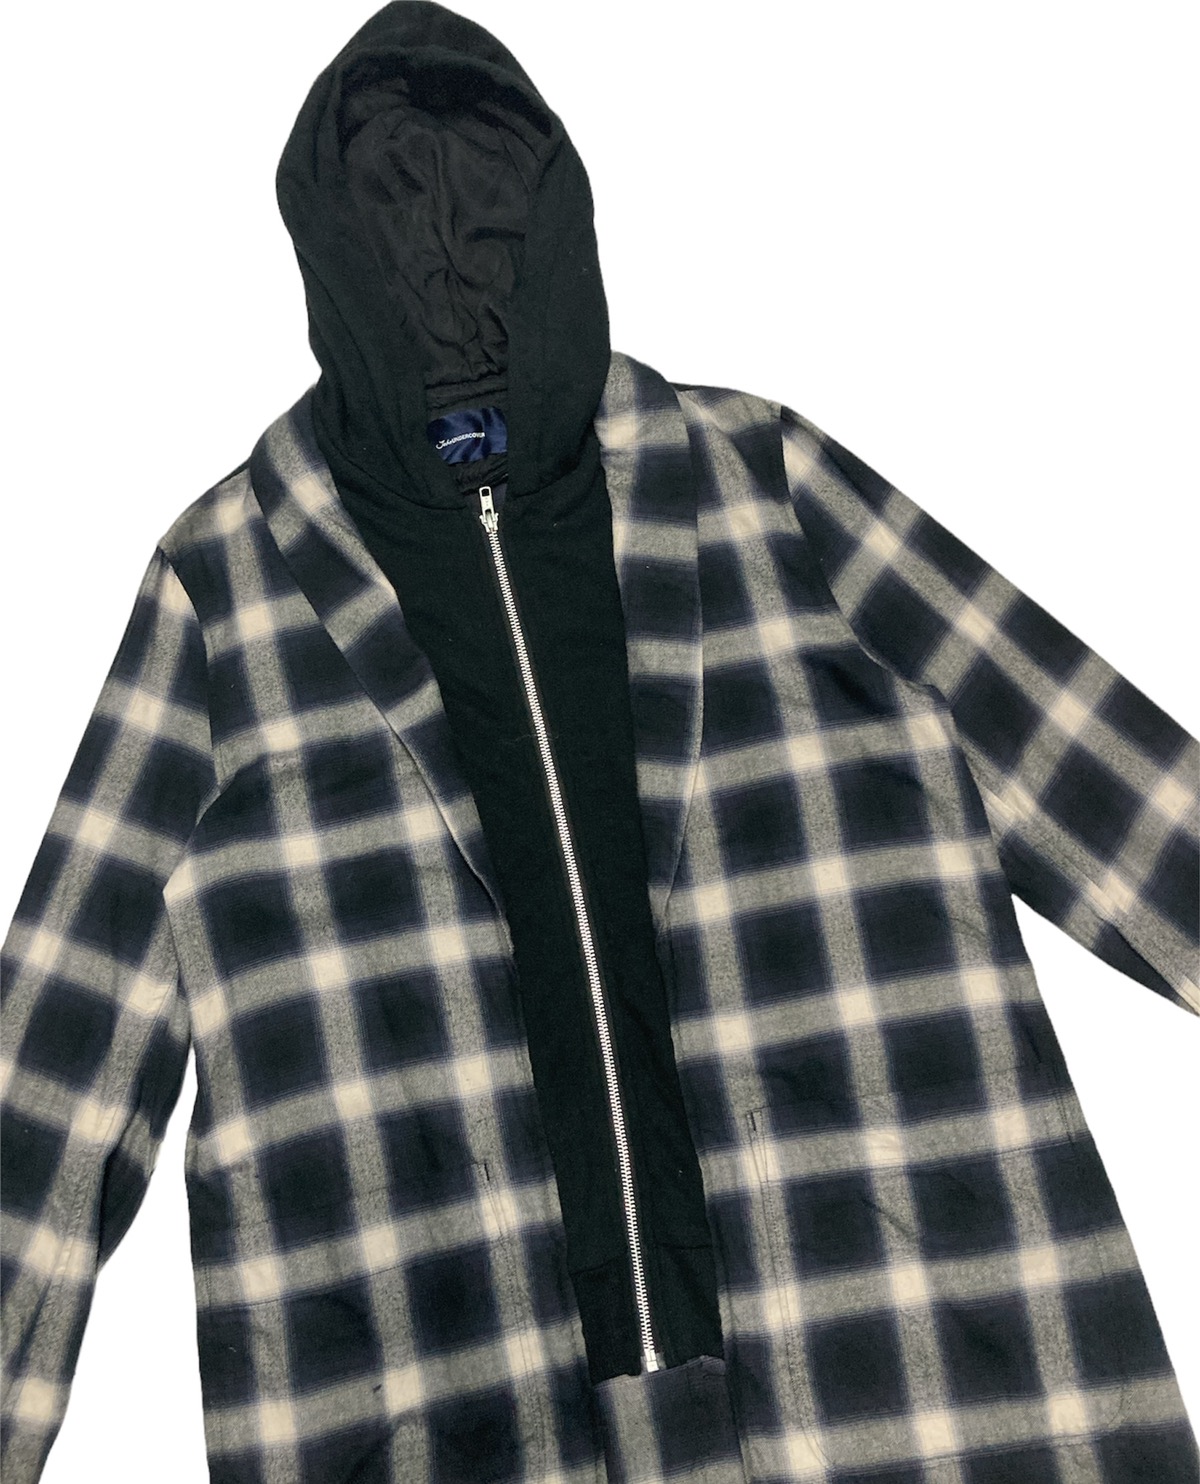 SS17 John Undercover overcoat Tartan jacket - 4